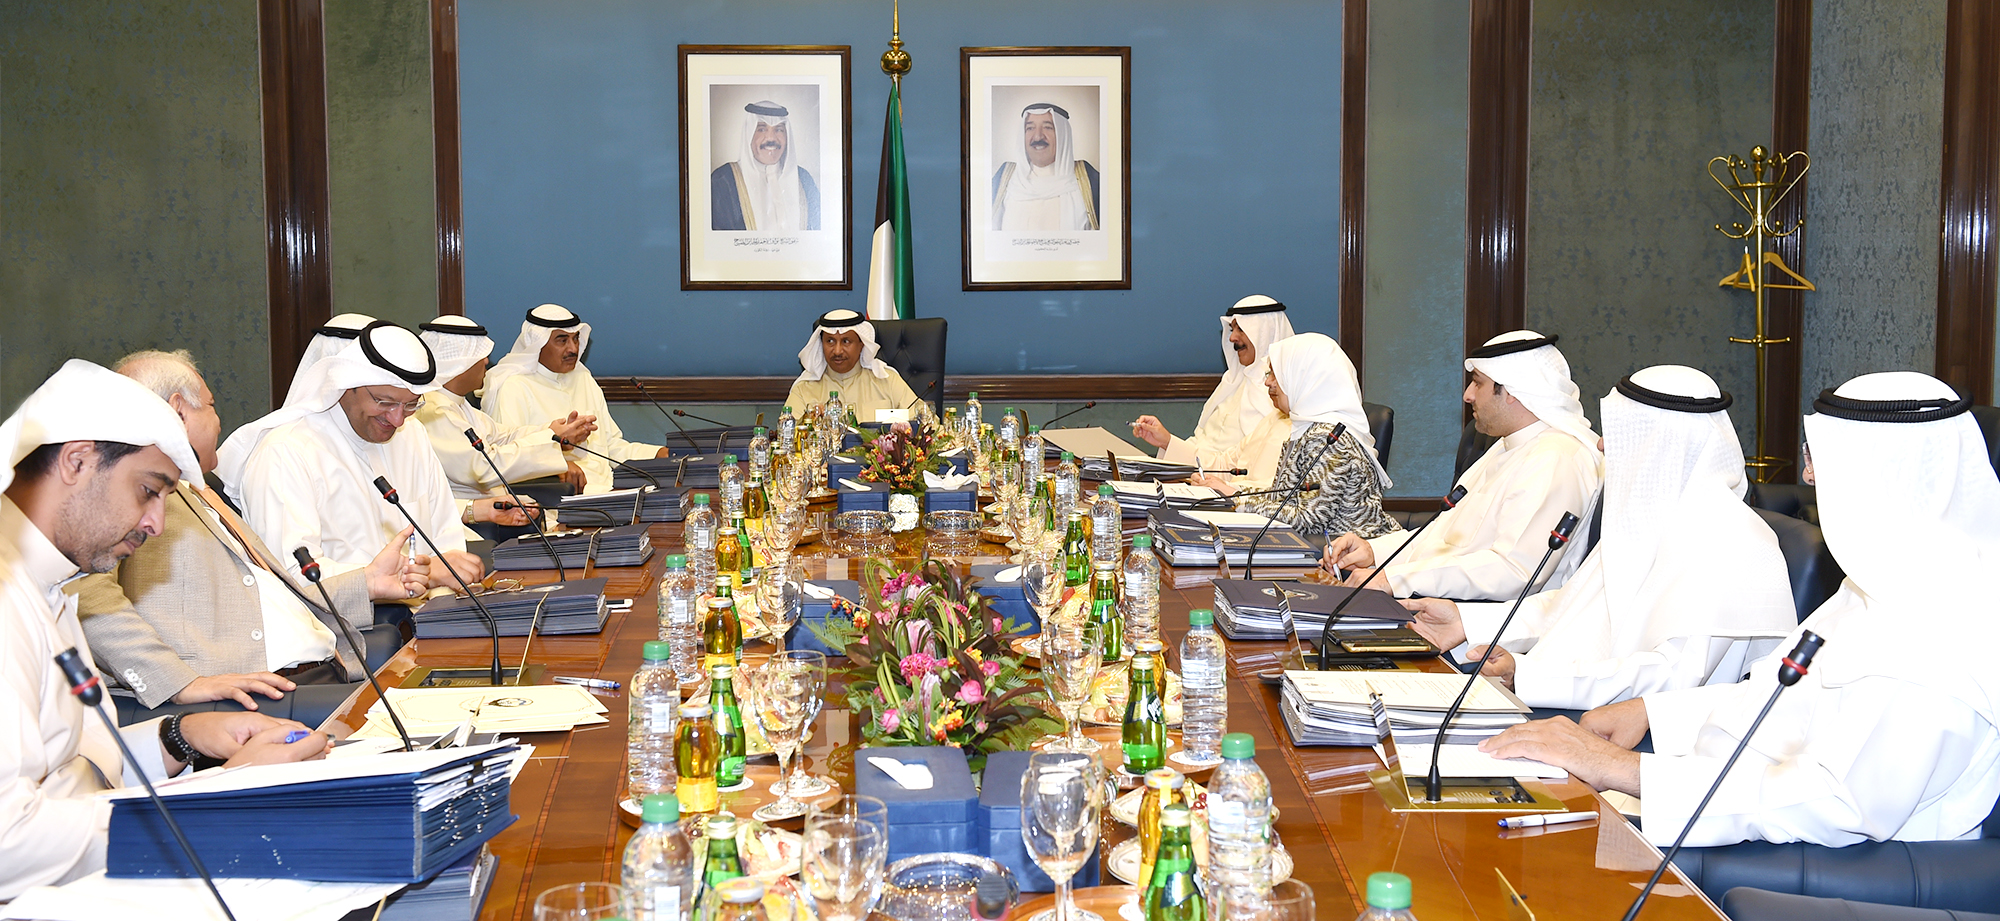 His Highness the Prime Minister Sheikh Jaber Al-Mubarak Al-Hamad Al-Sabah presides the cabinet weekly meeting